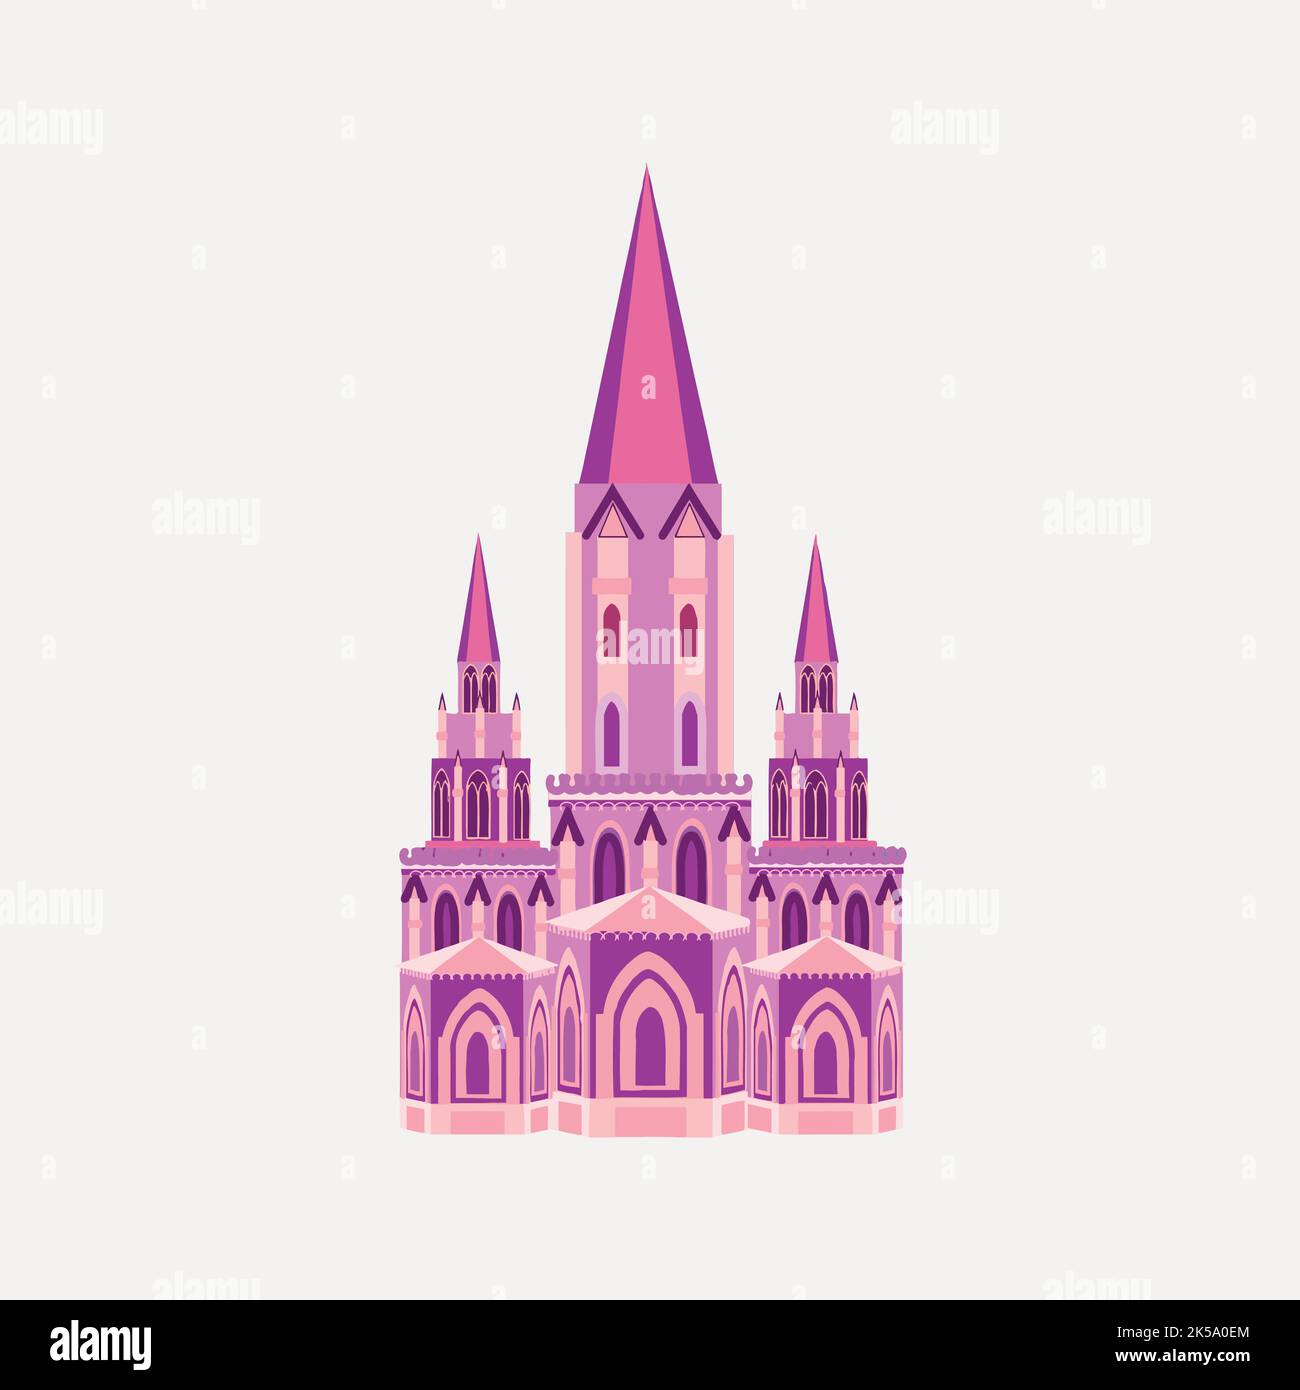 Church clipart, architecture illustration vector Stock Vector Image ...